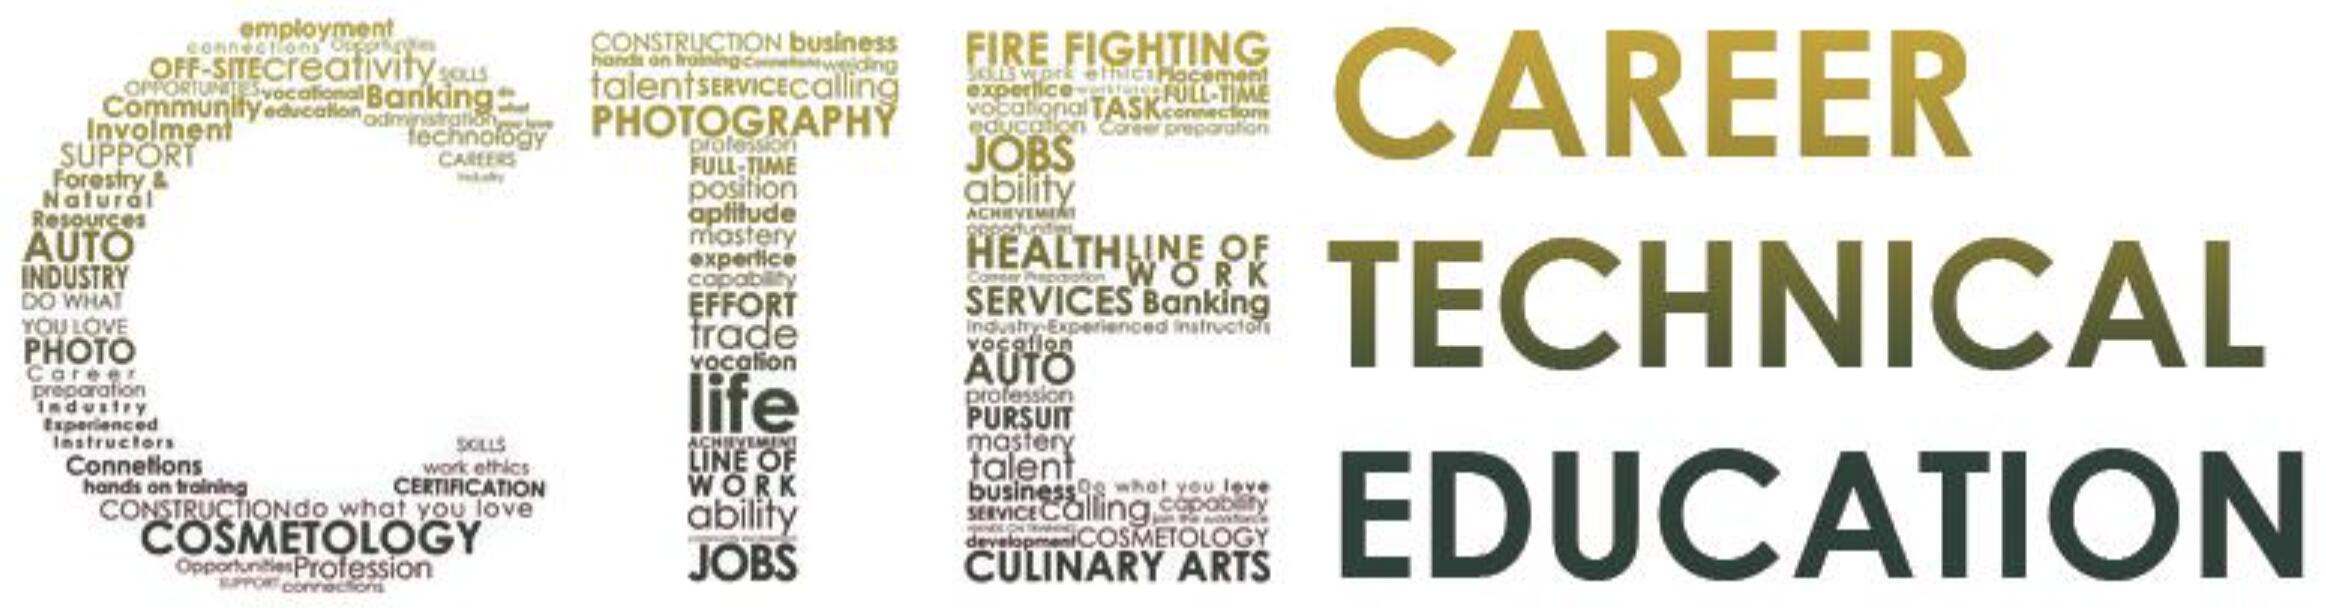 Career & Technical Education banner